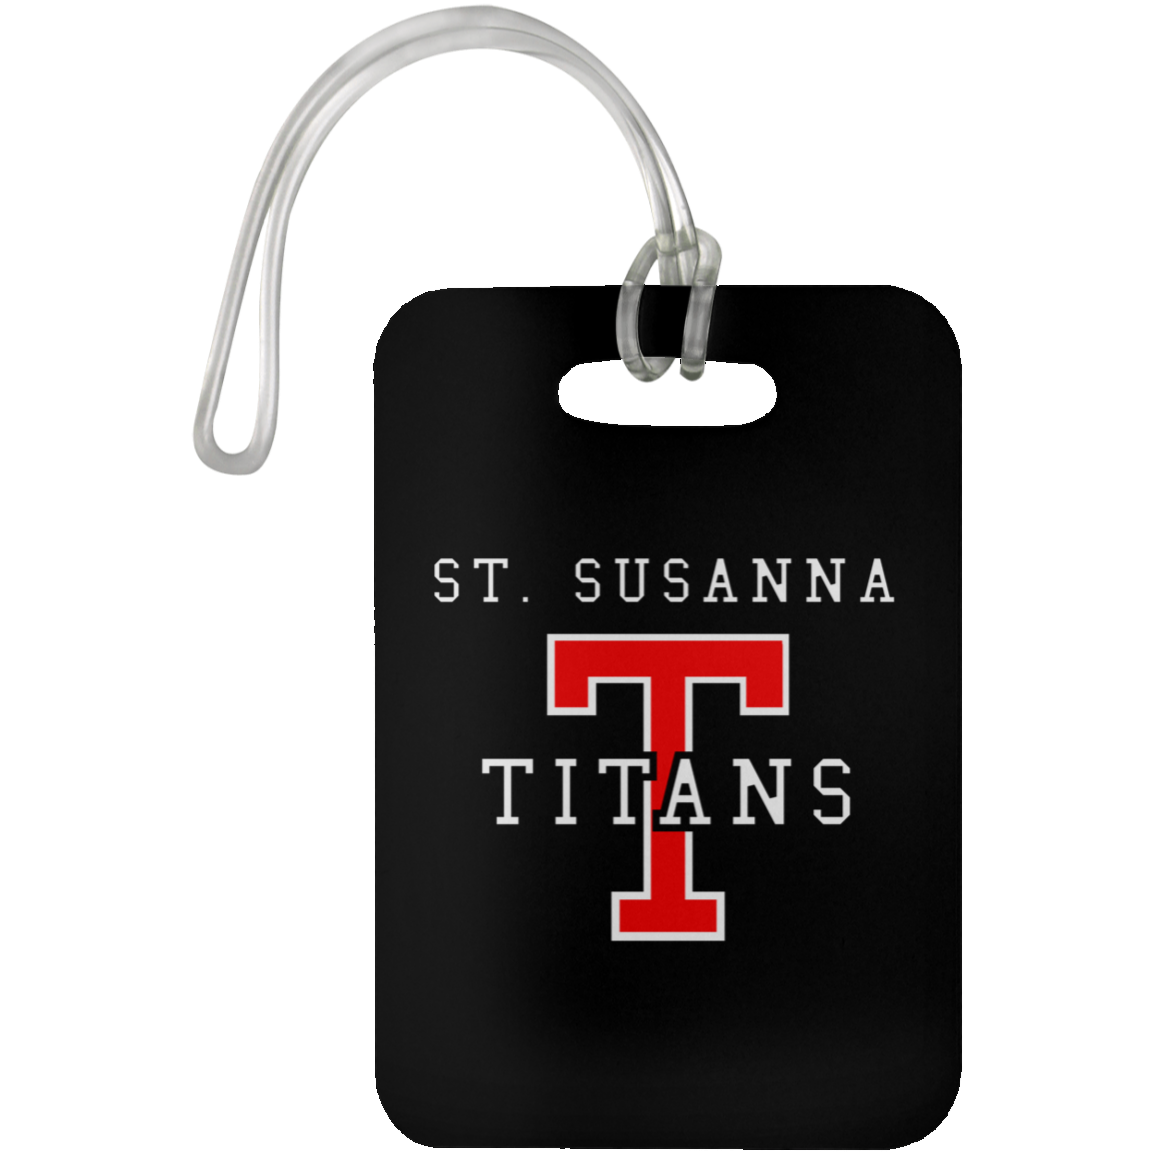 St. Susanna Titans Luggage Bag Tag